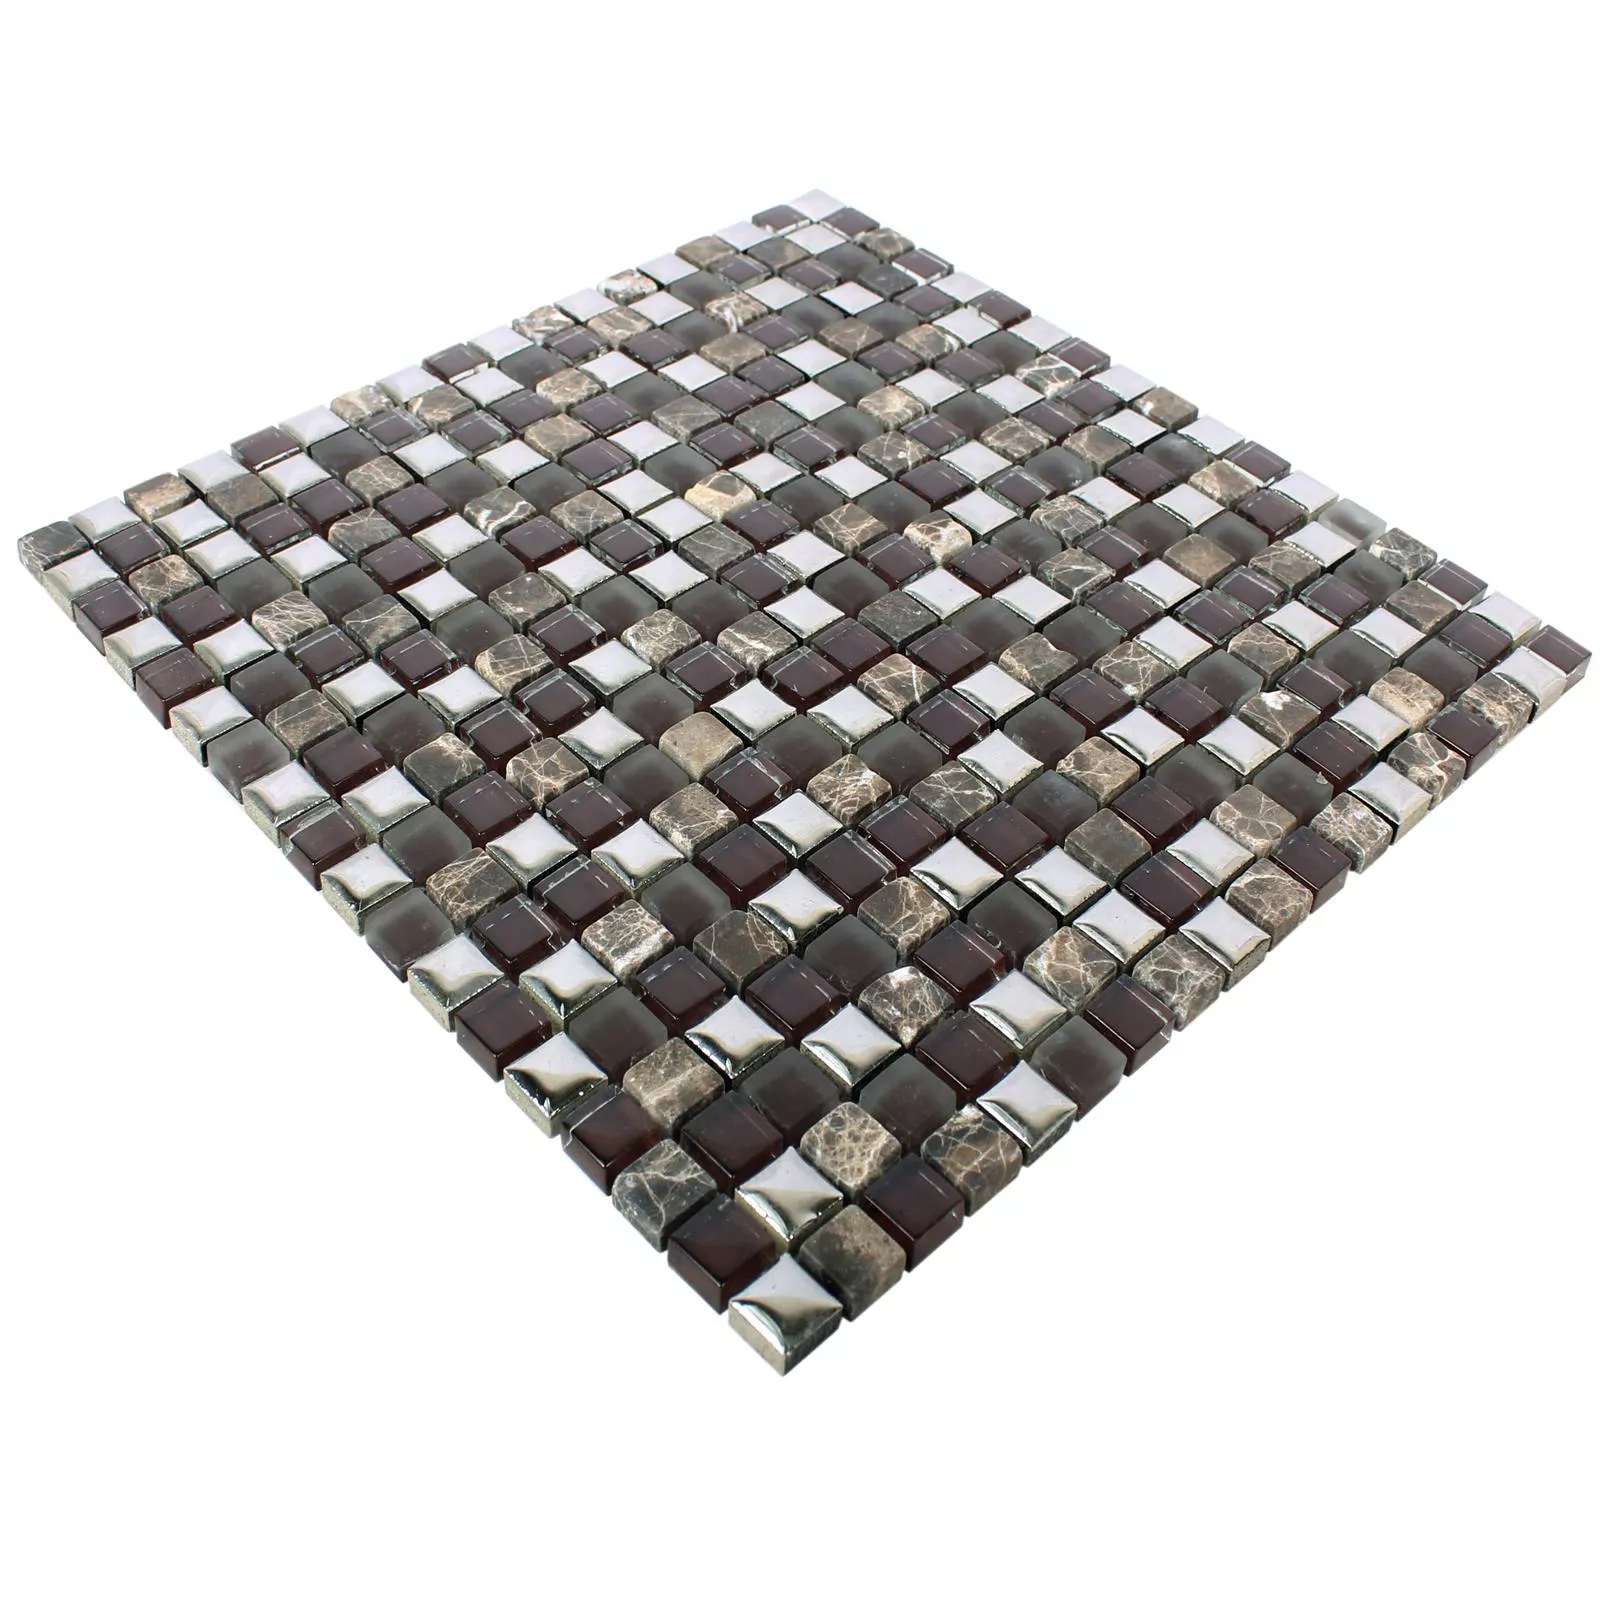 Sample Mosaic Tiles Glass Marble Ceramic Brown Silver